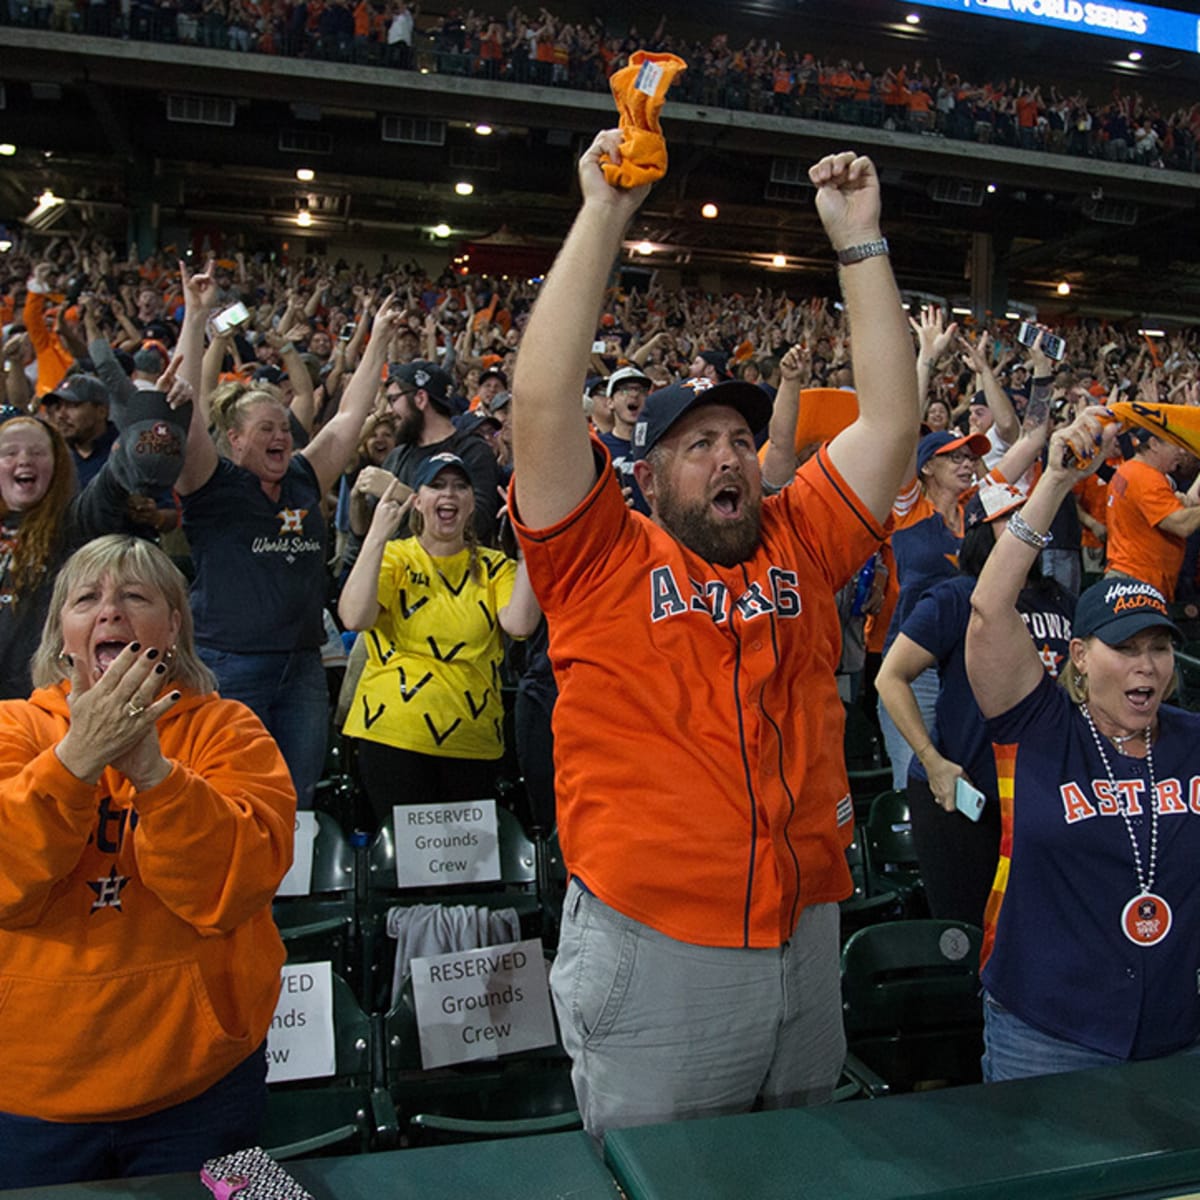 Cheering fans greet World Series champion Houston Astros – The